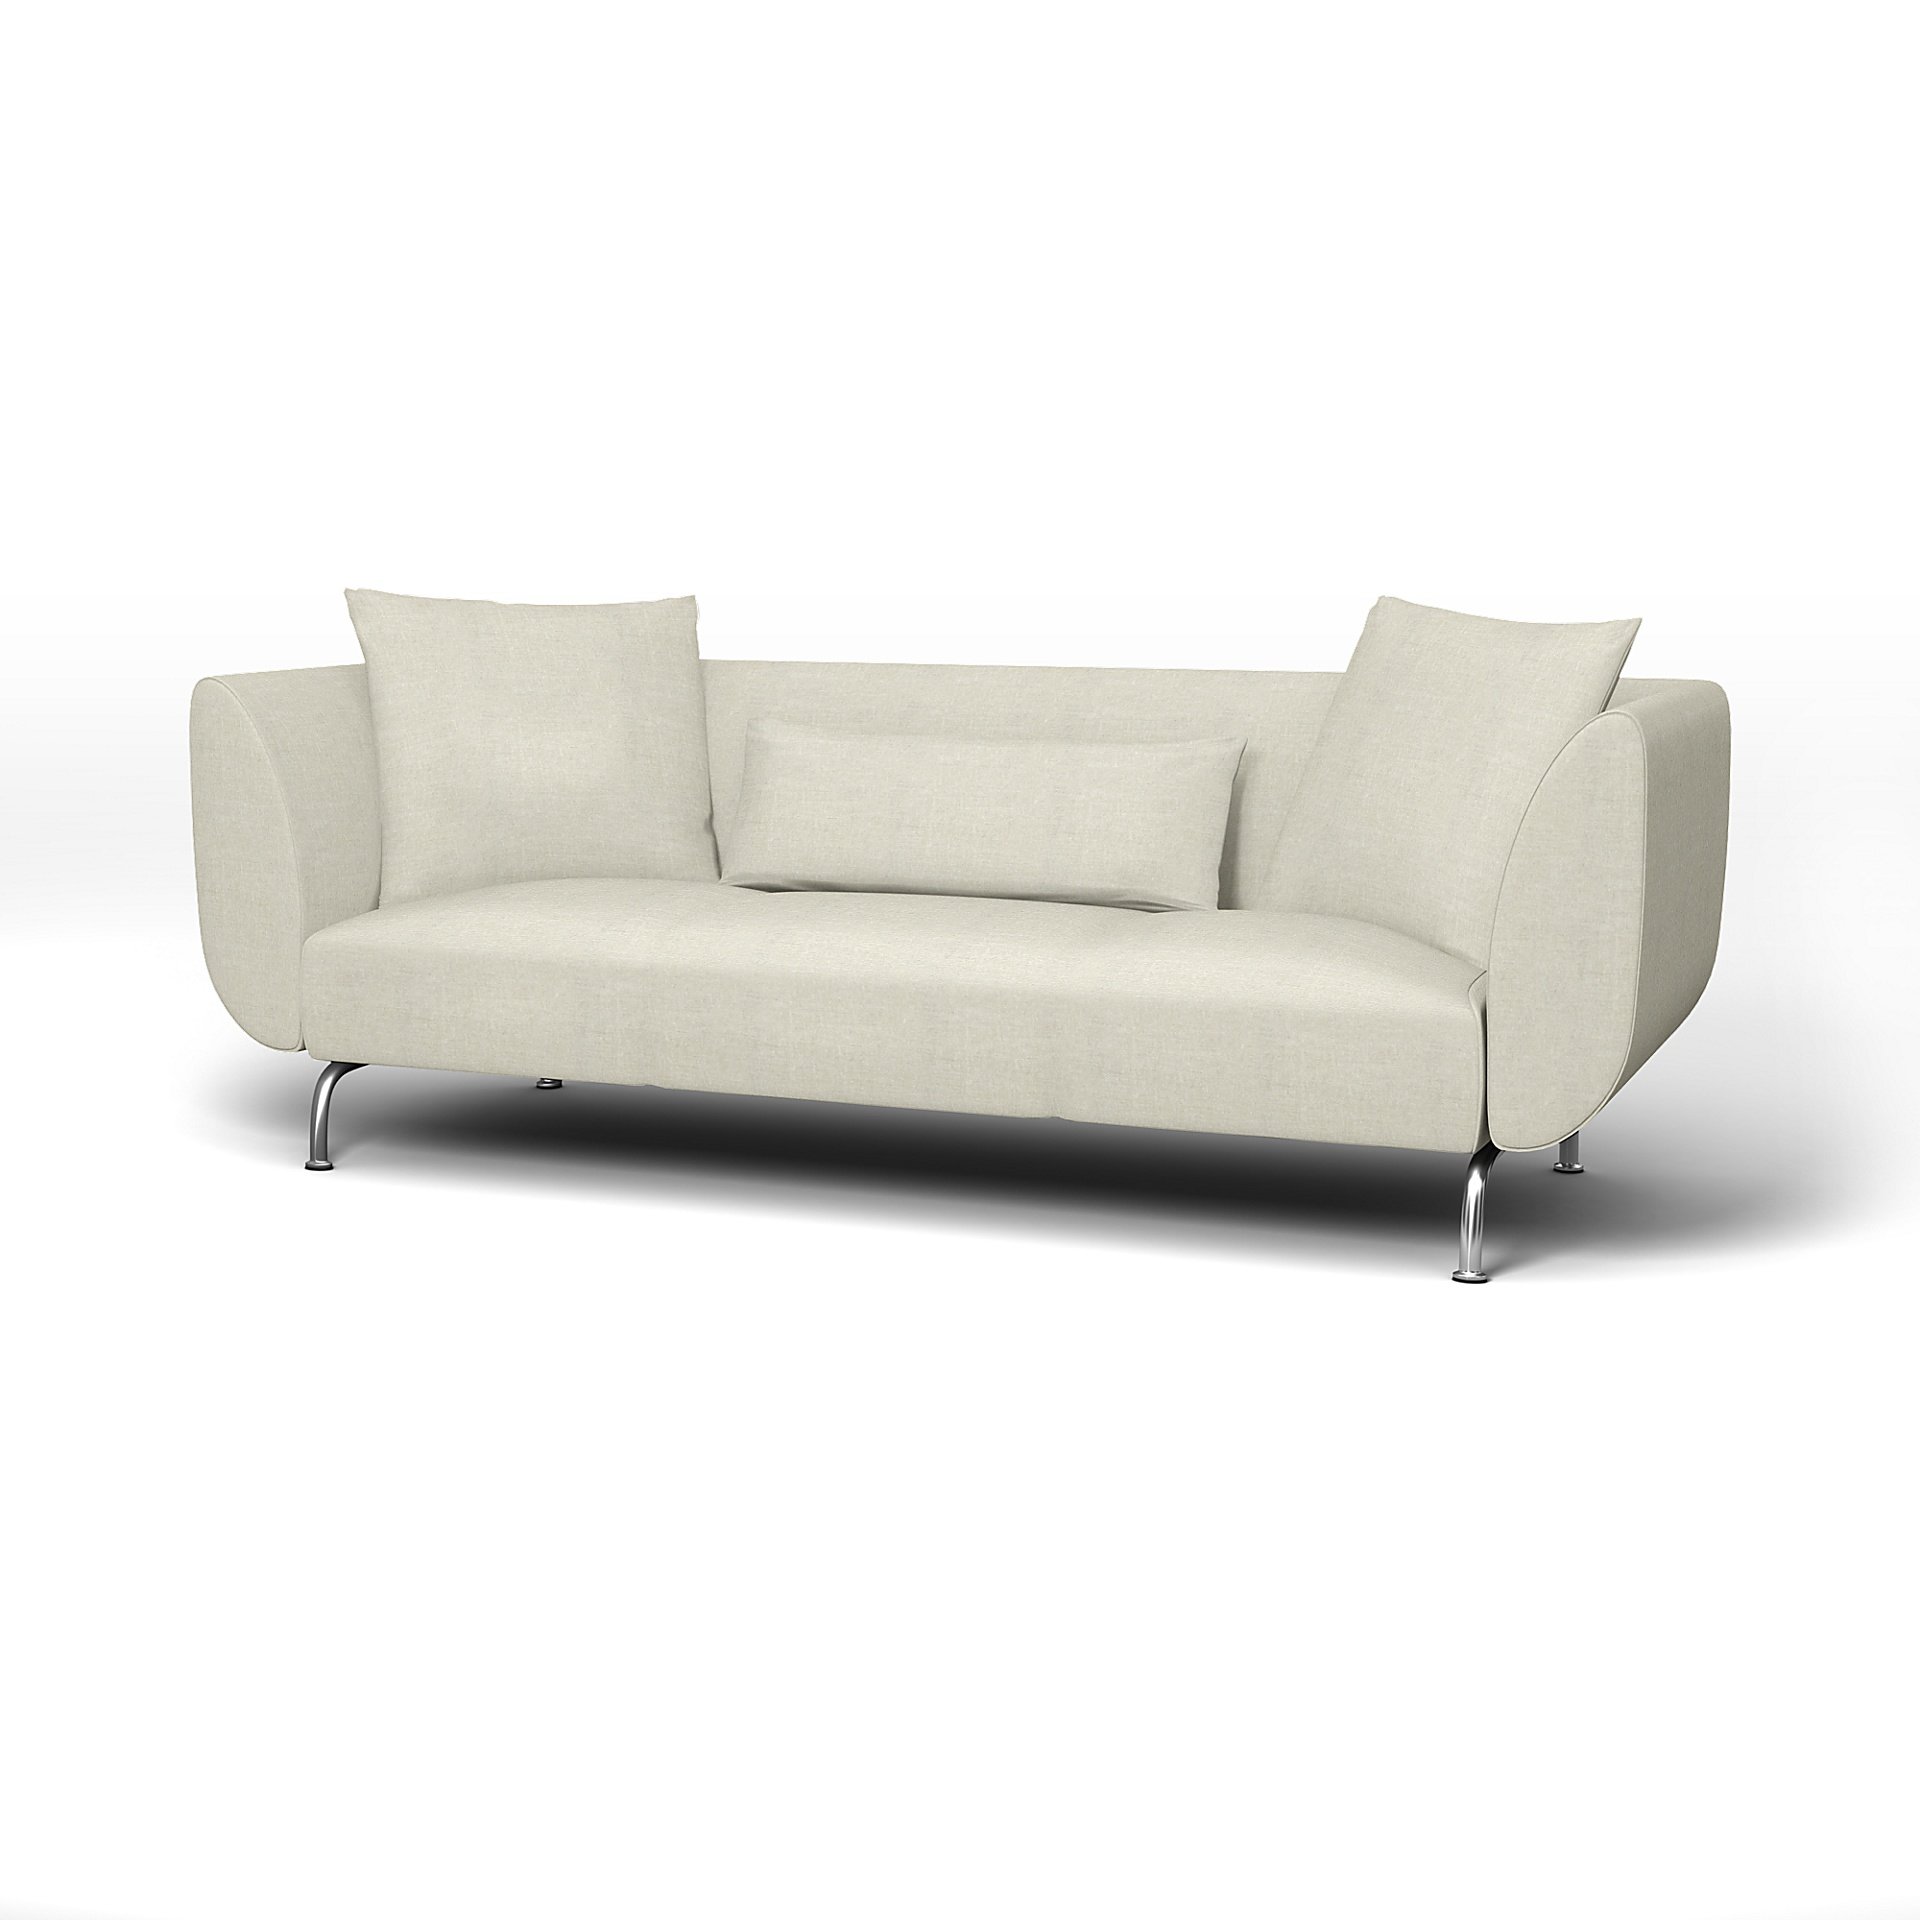 IKEA - Stromstad 3 Seater Sofa Cover, Natural, Linen - Bemz